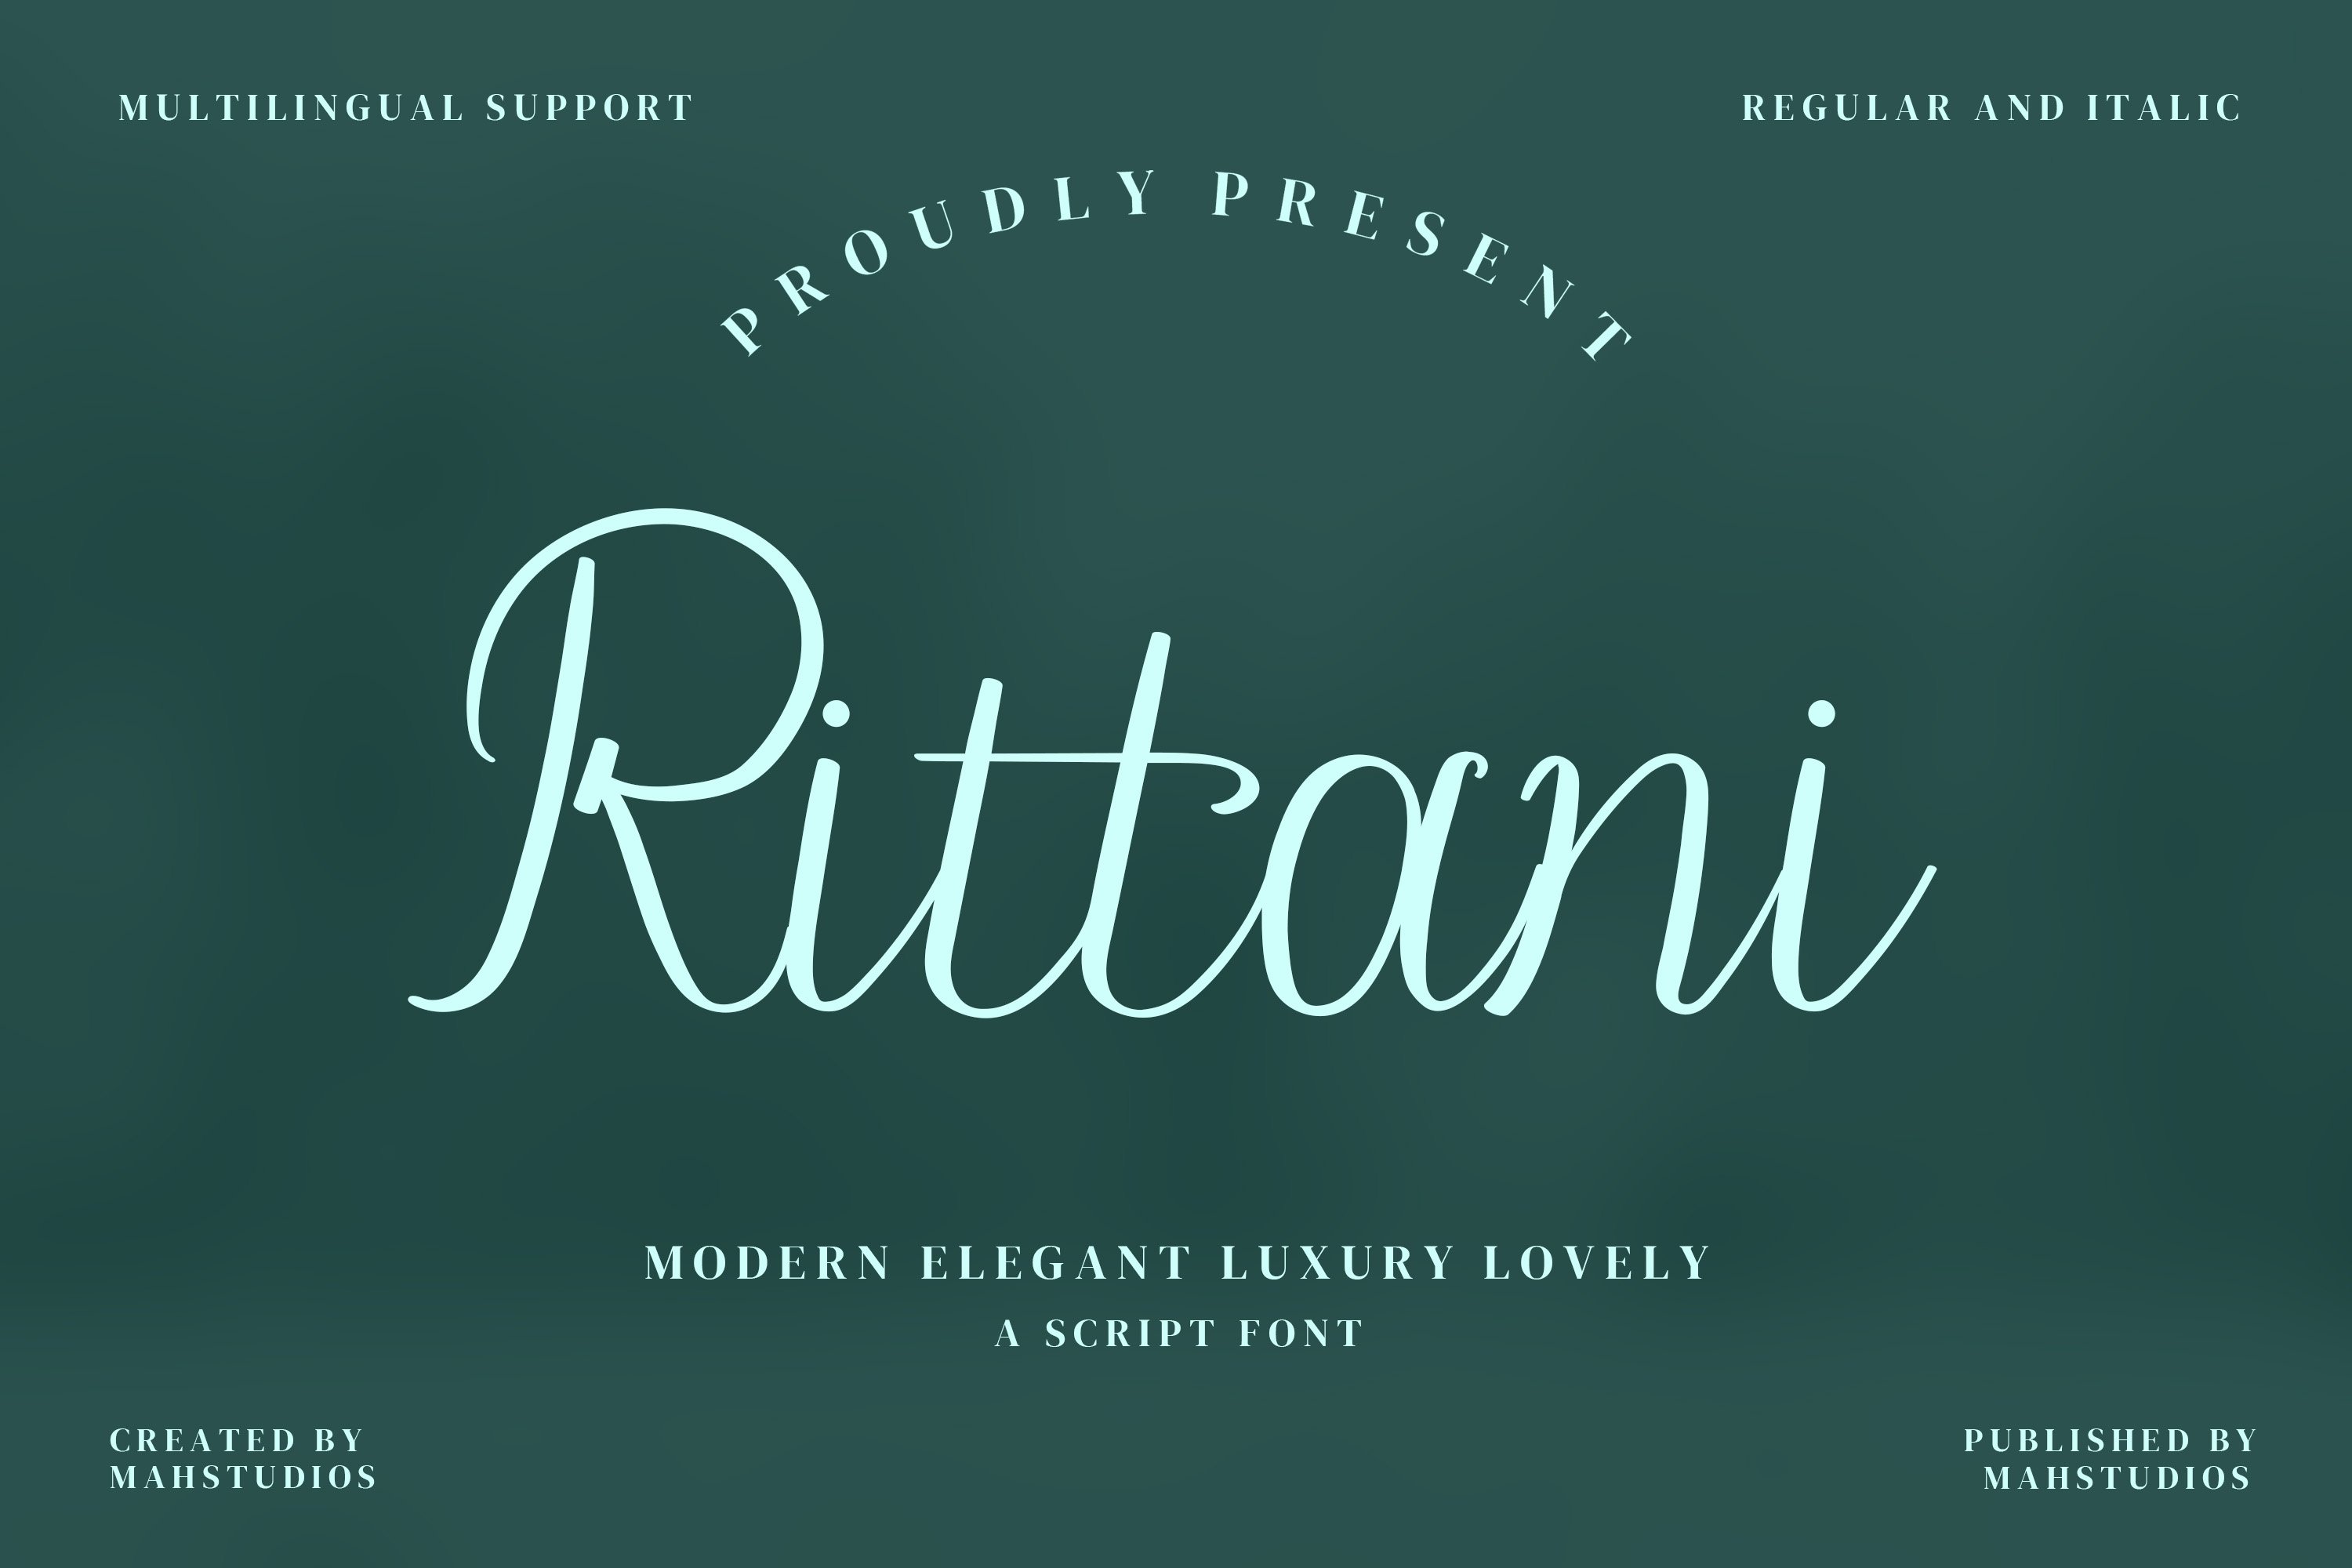 Rittani Script Fontscover image.